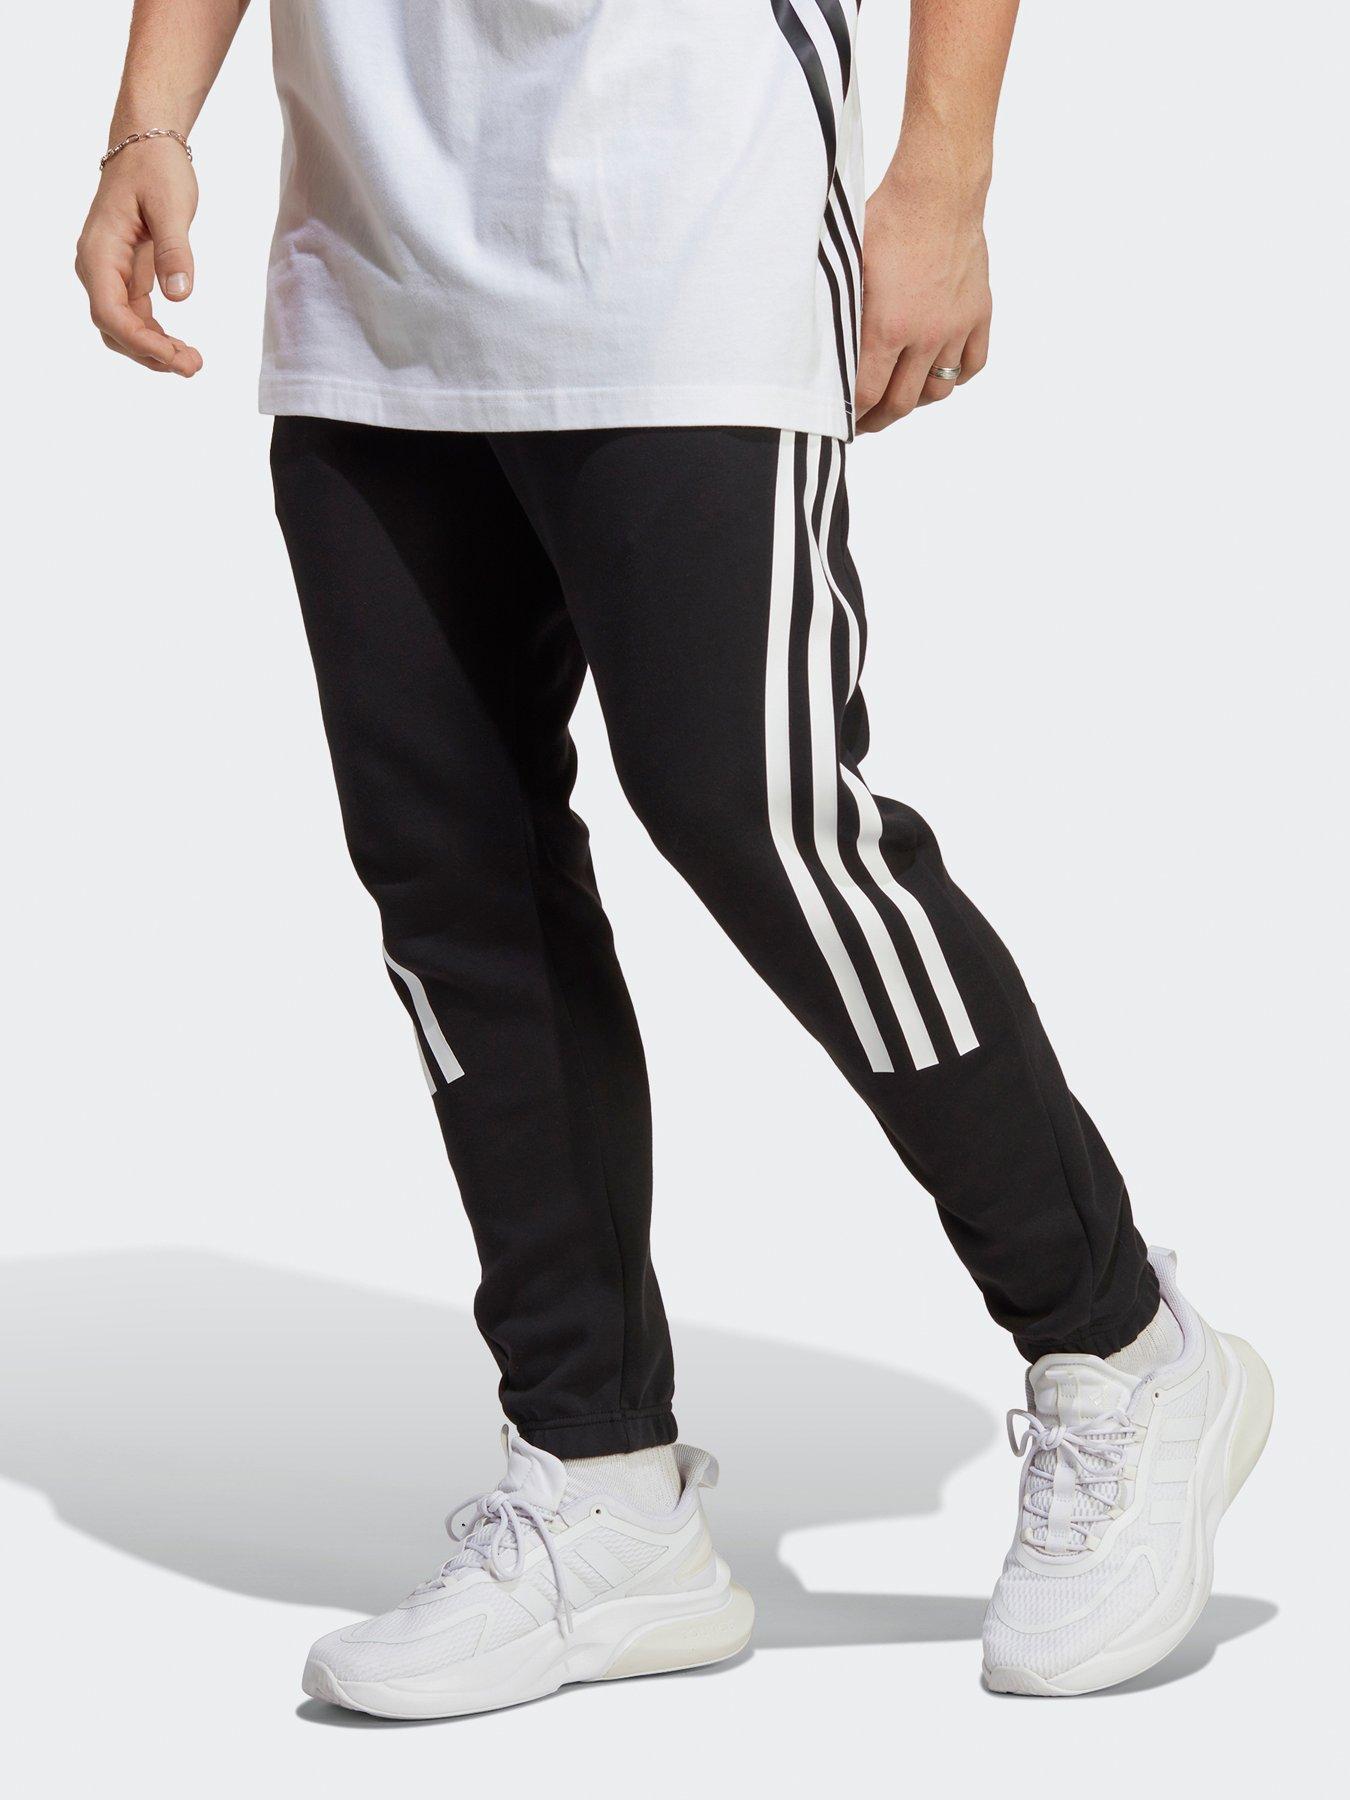 3XL, Adidas, Jogging bottoms, Mens sports clothing